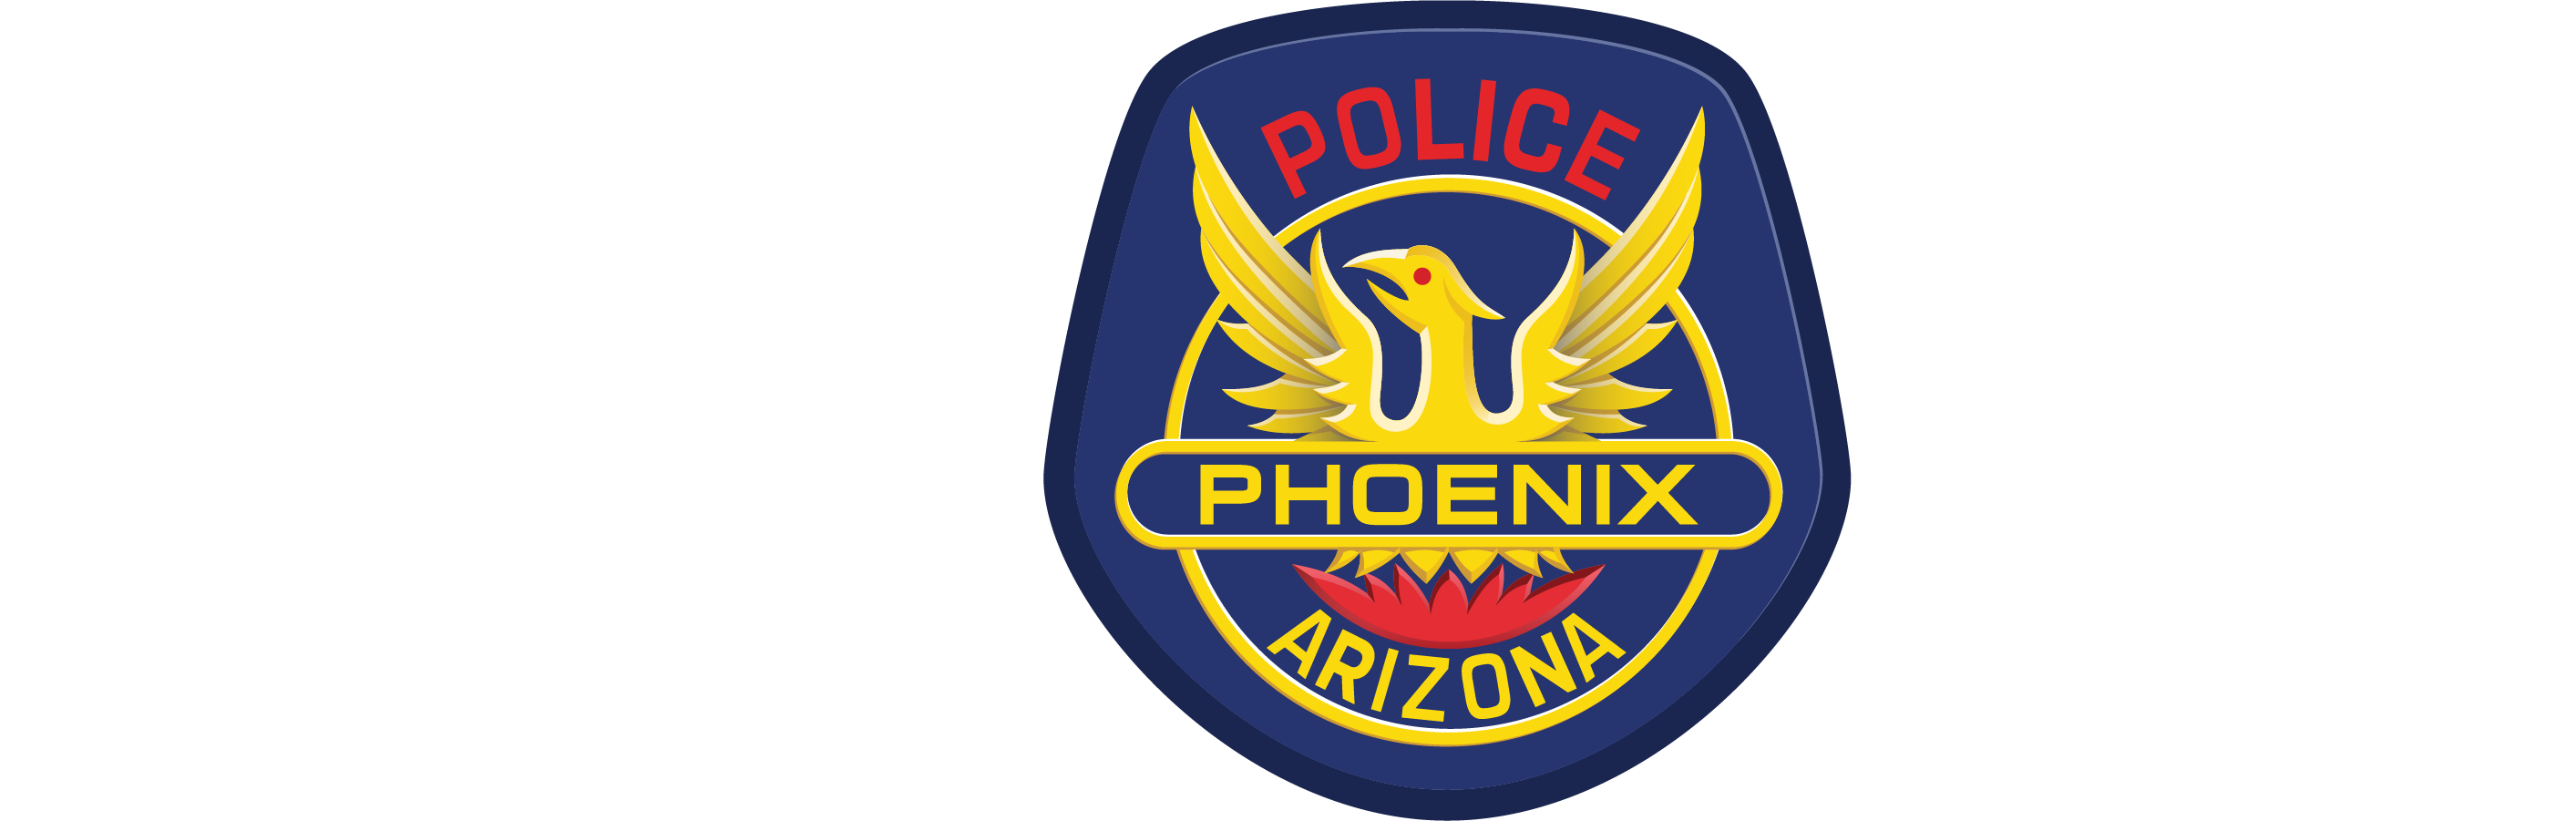 Phoenix Police Department logo.